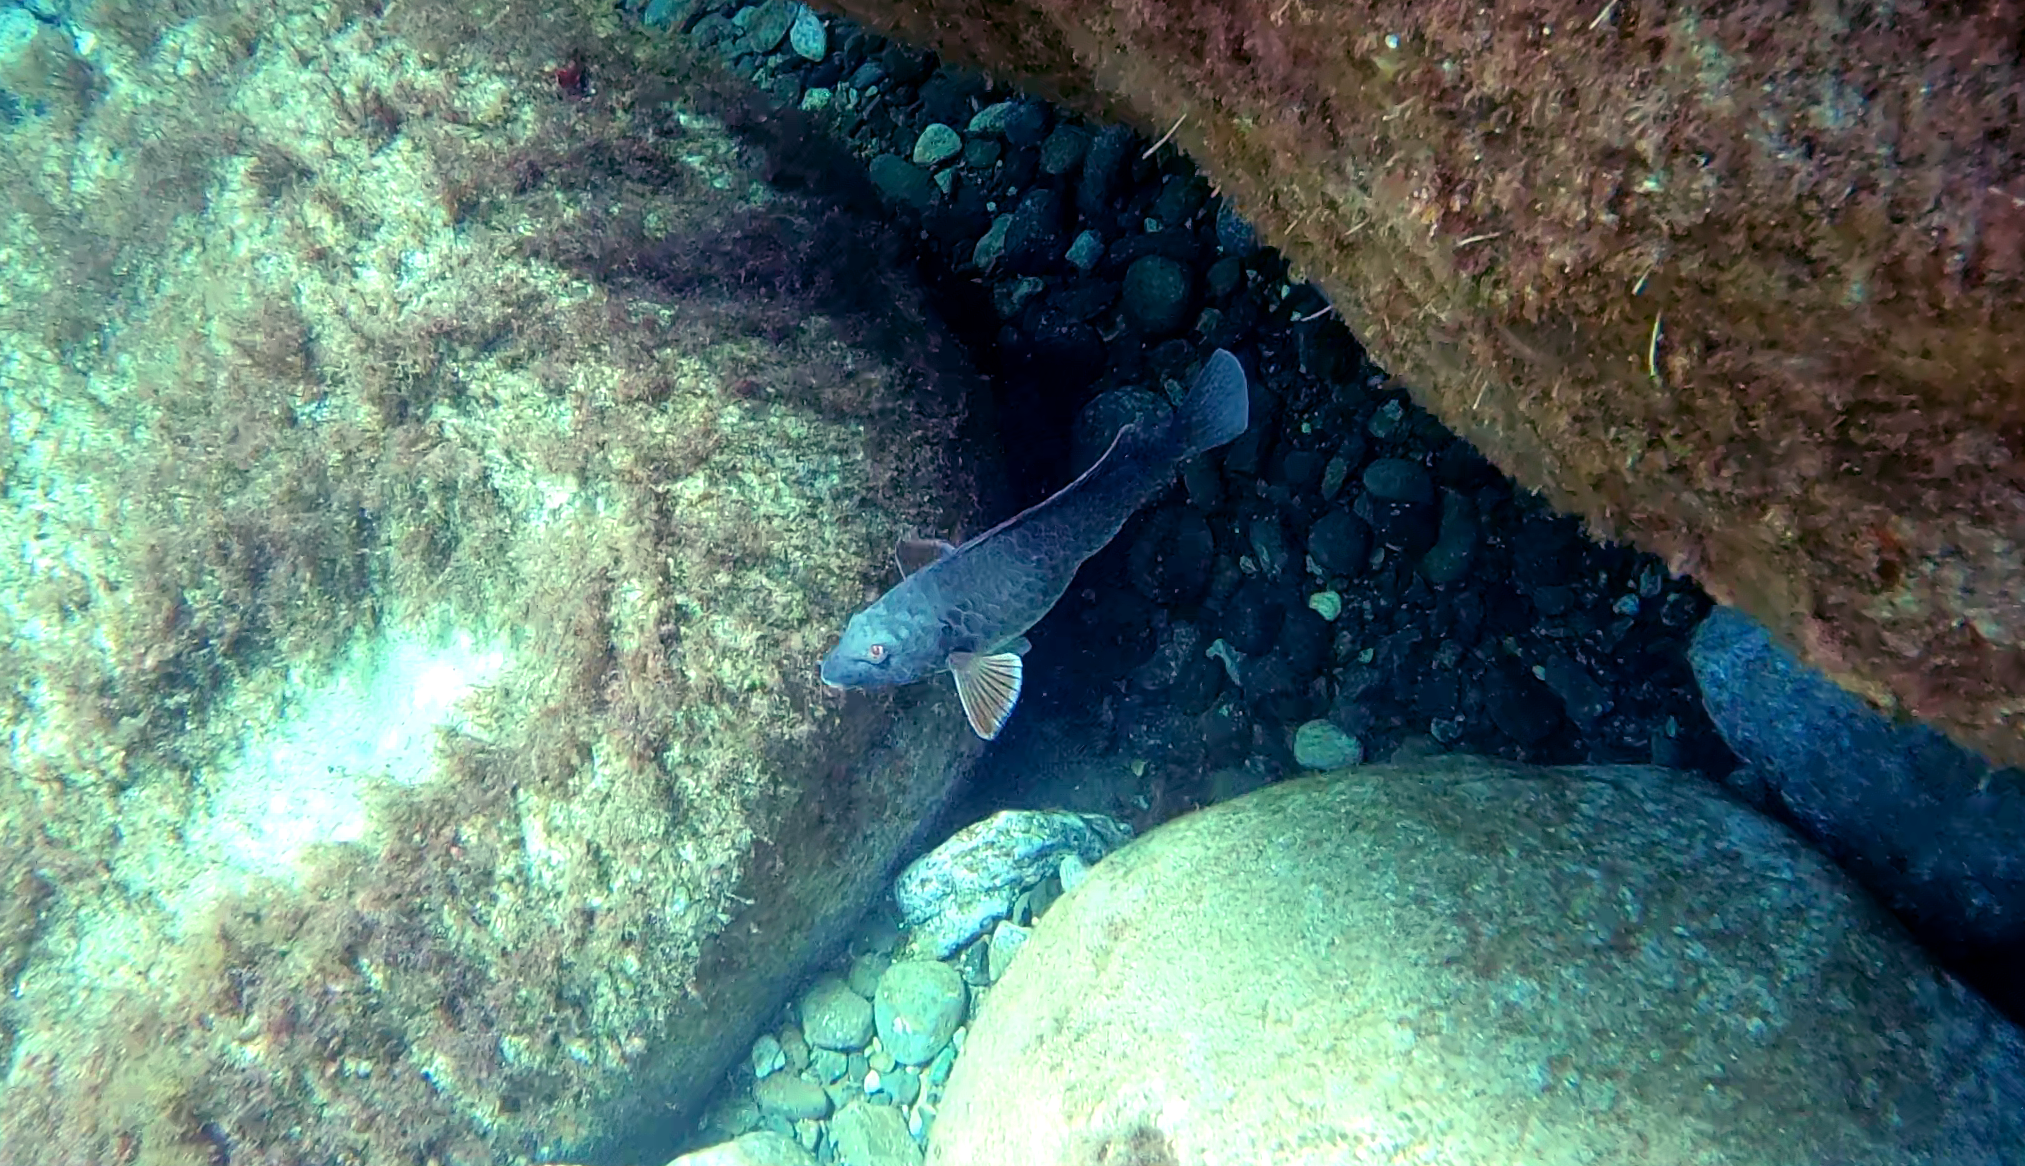 Pesce Pappagallo mediterraneo maschio Mediterranean Parrotfish male Sparisoma cretense intotheblue.it